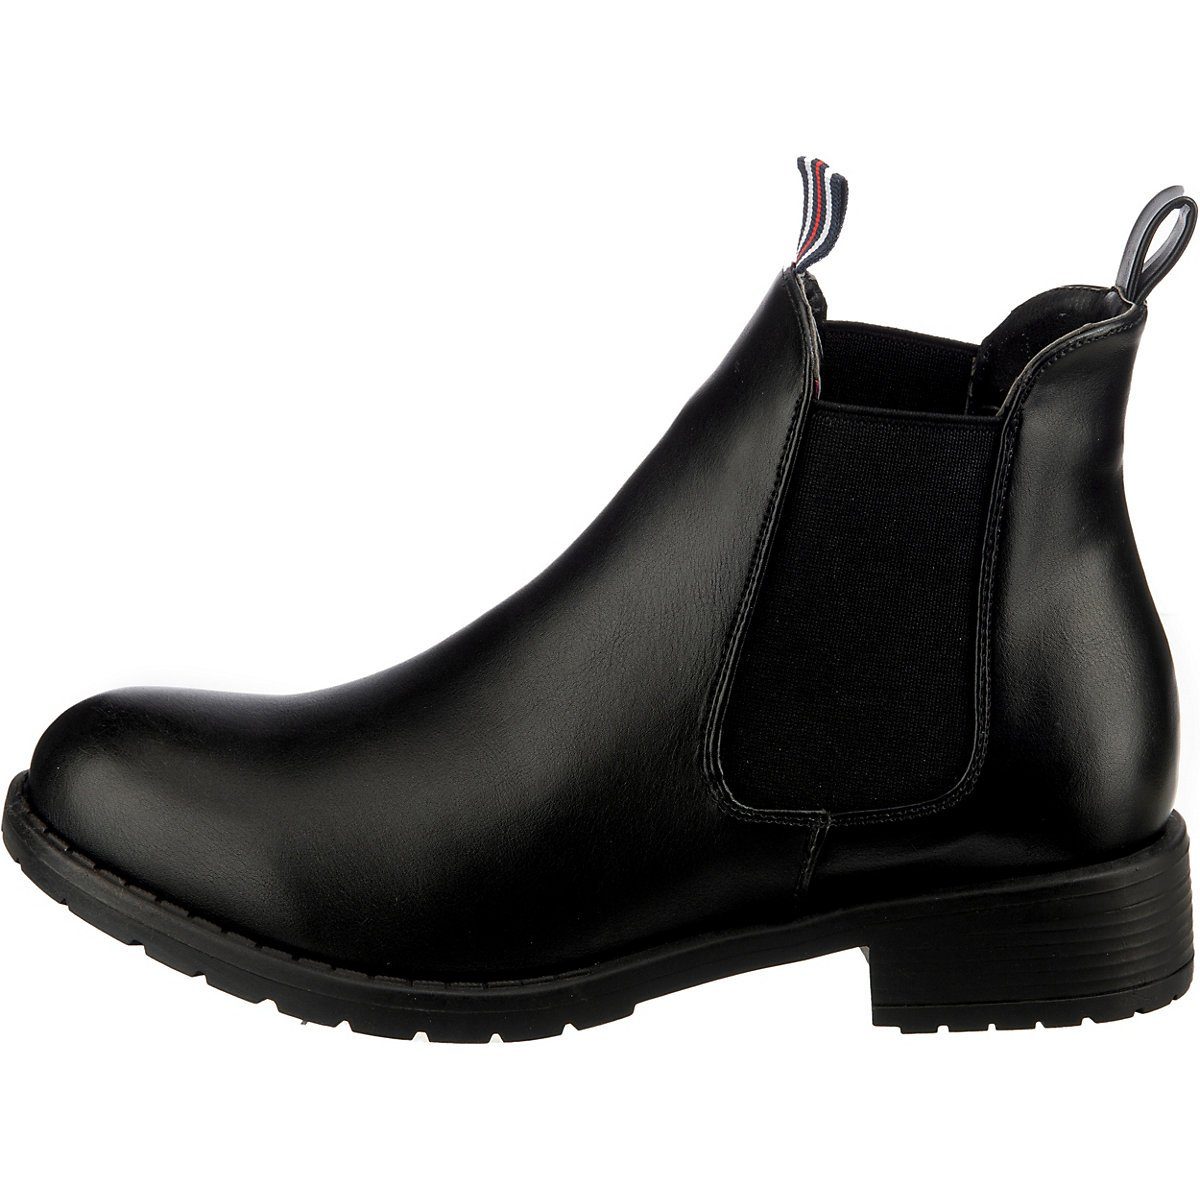 Schuhe Boots ambellis Vegane Classic Chelseas mit Farbakzent Chelseaboots